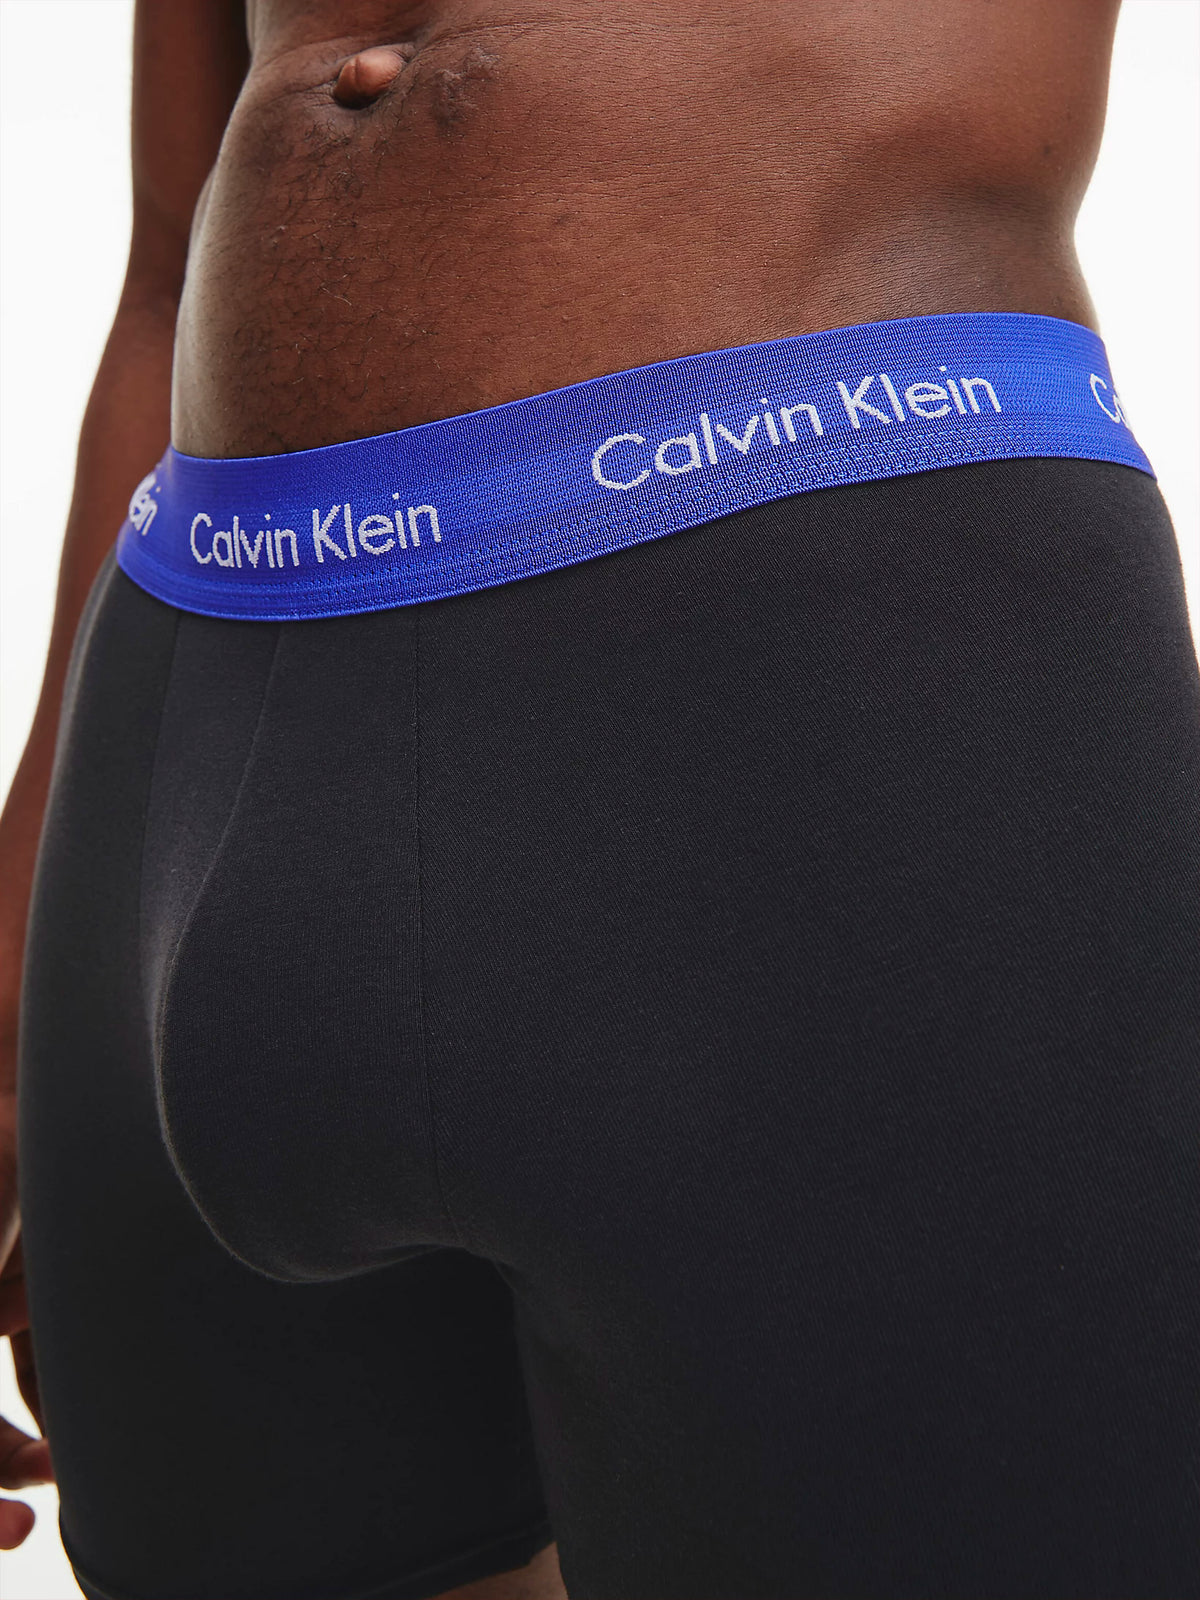 Calvin Klein Mens Boxer Briefs - Classic Fit (3-Pack), 04, Nb1770A, B-Shoreline/ Clem/ Travertine Wb